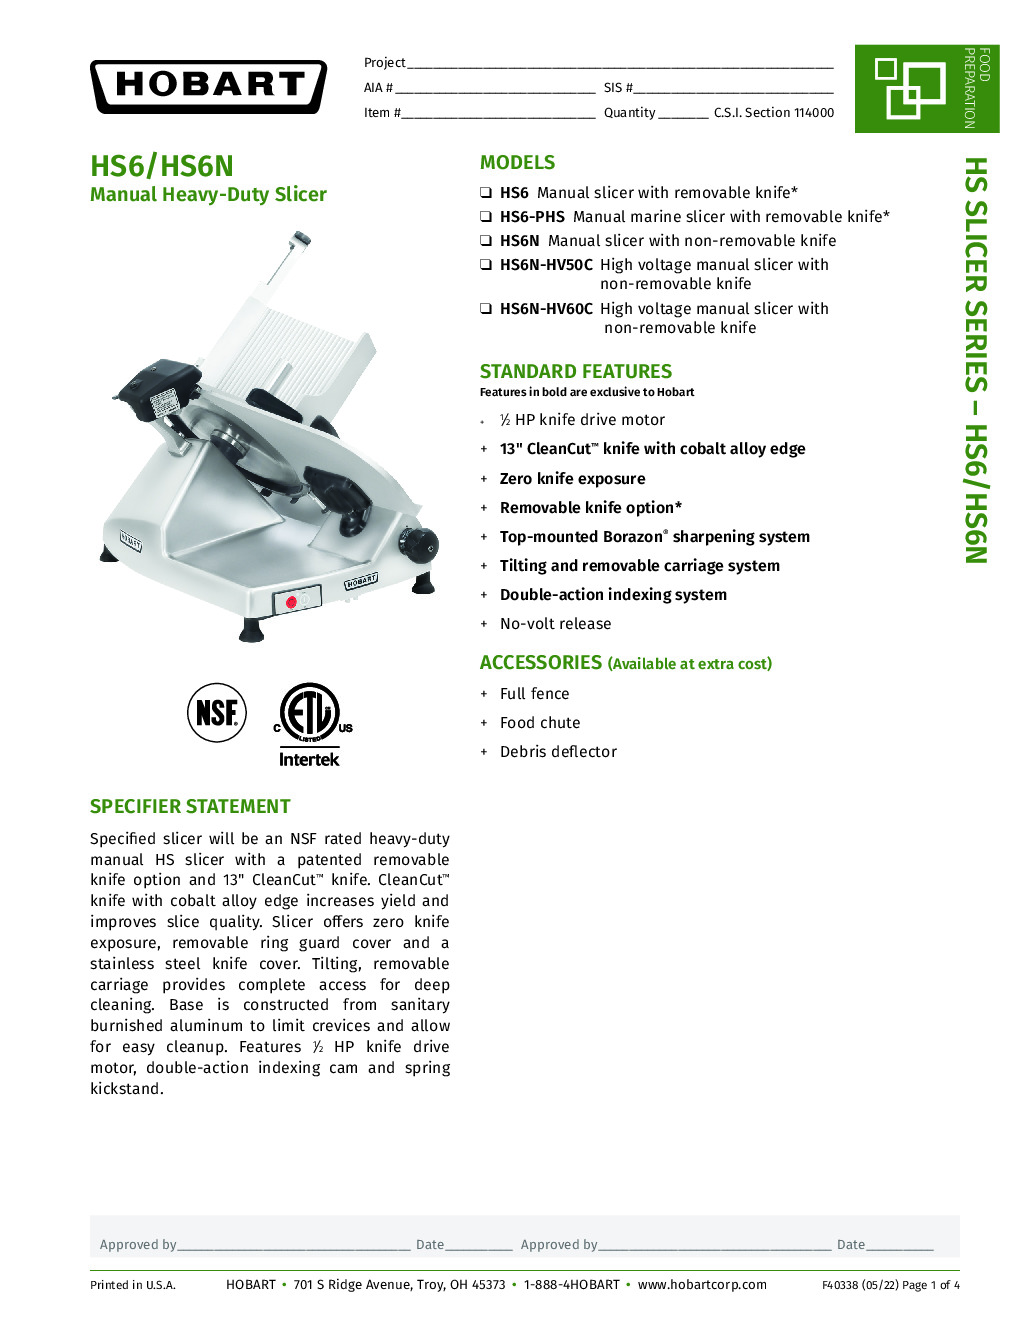 Hobart HS6-PHS Manual Marine Meat Slicer with 13